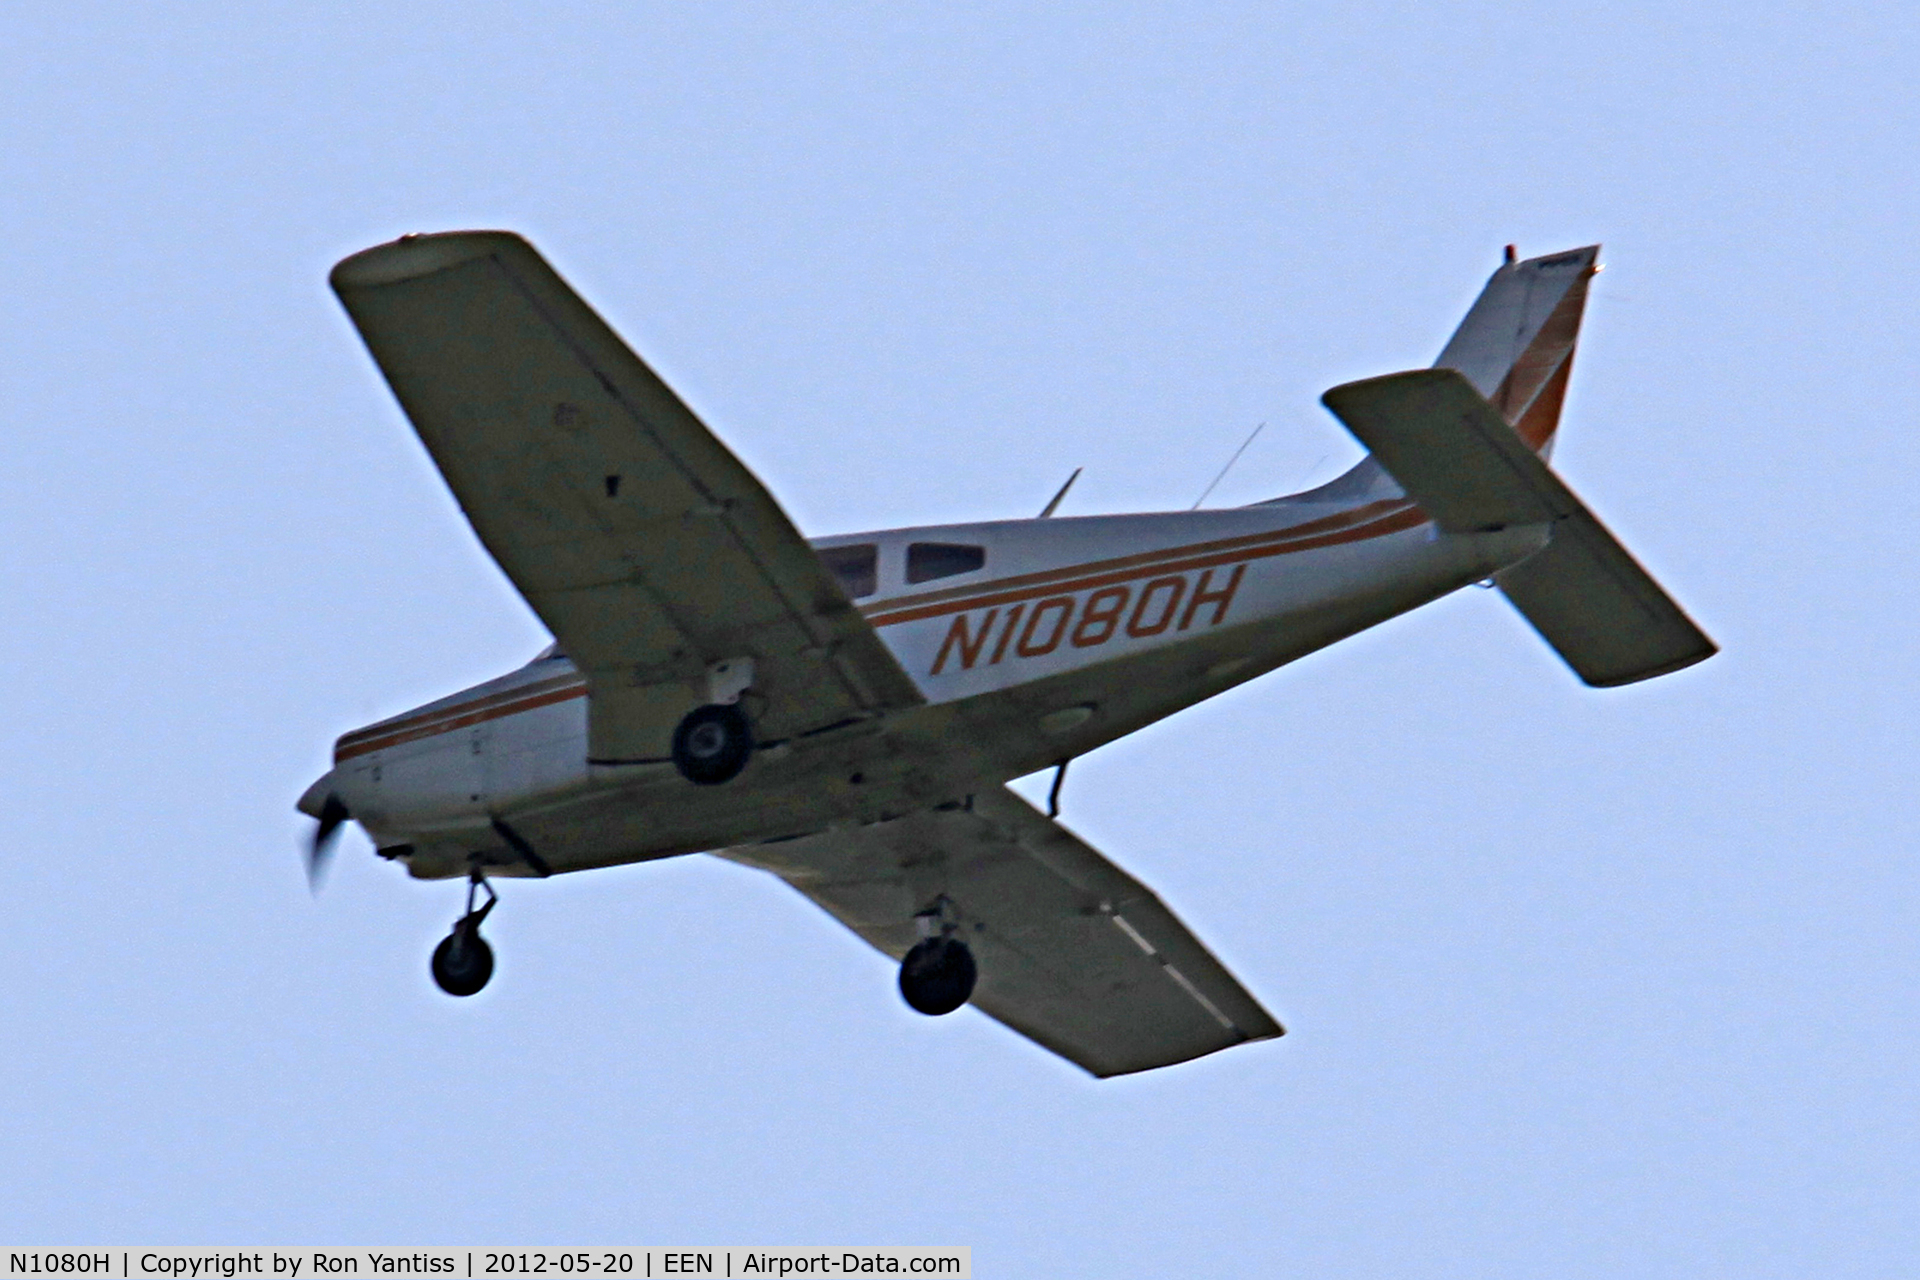 N1080H, Piper PA-28-151 C/N 28-7715306, Short final for runway 02, Dillant-Hopkins Airport, Keene, NH